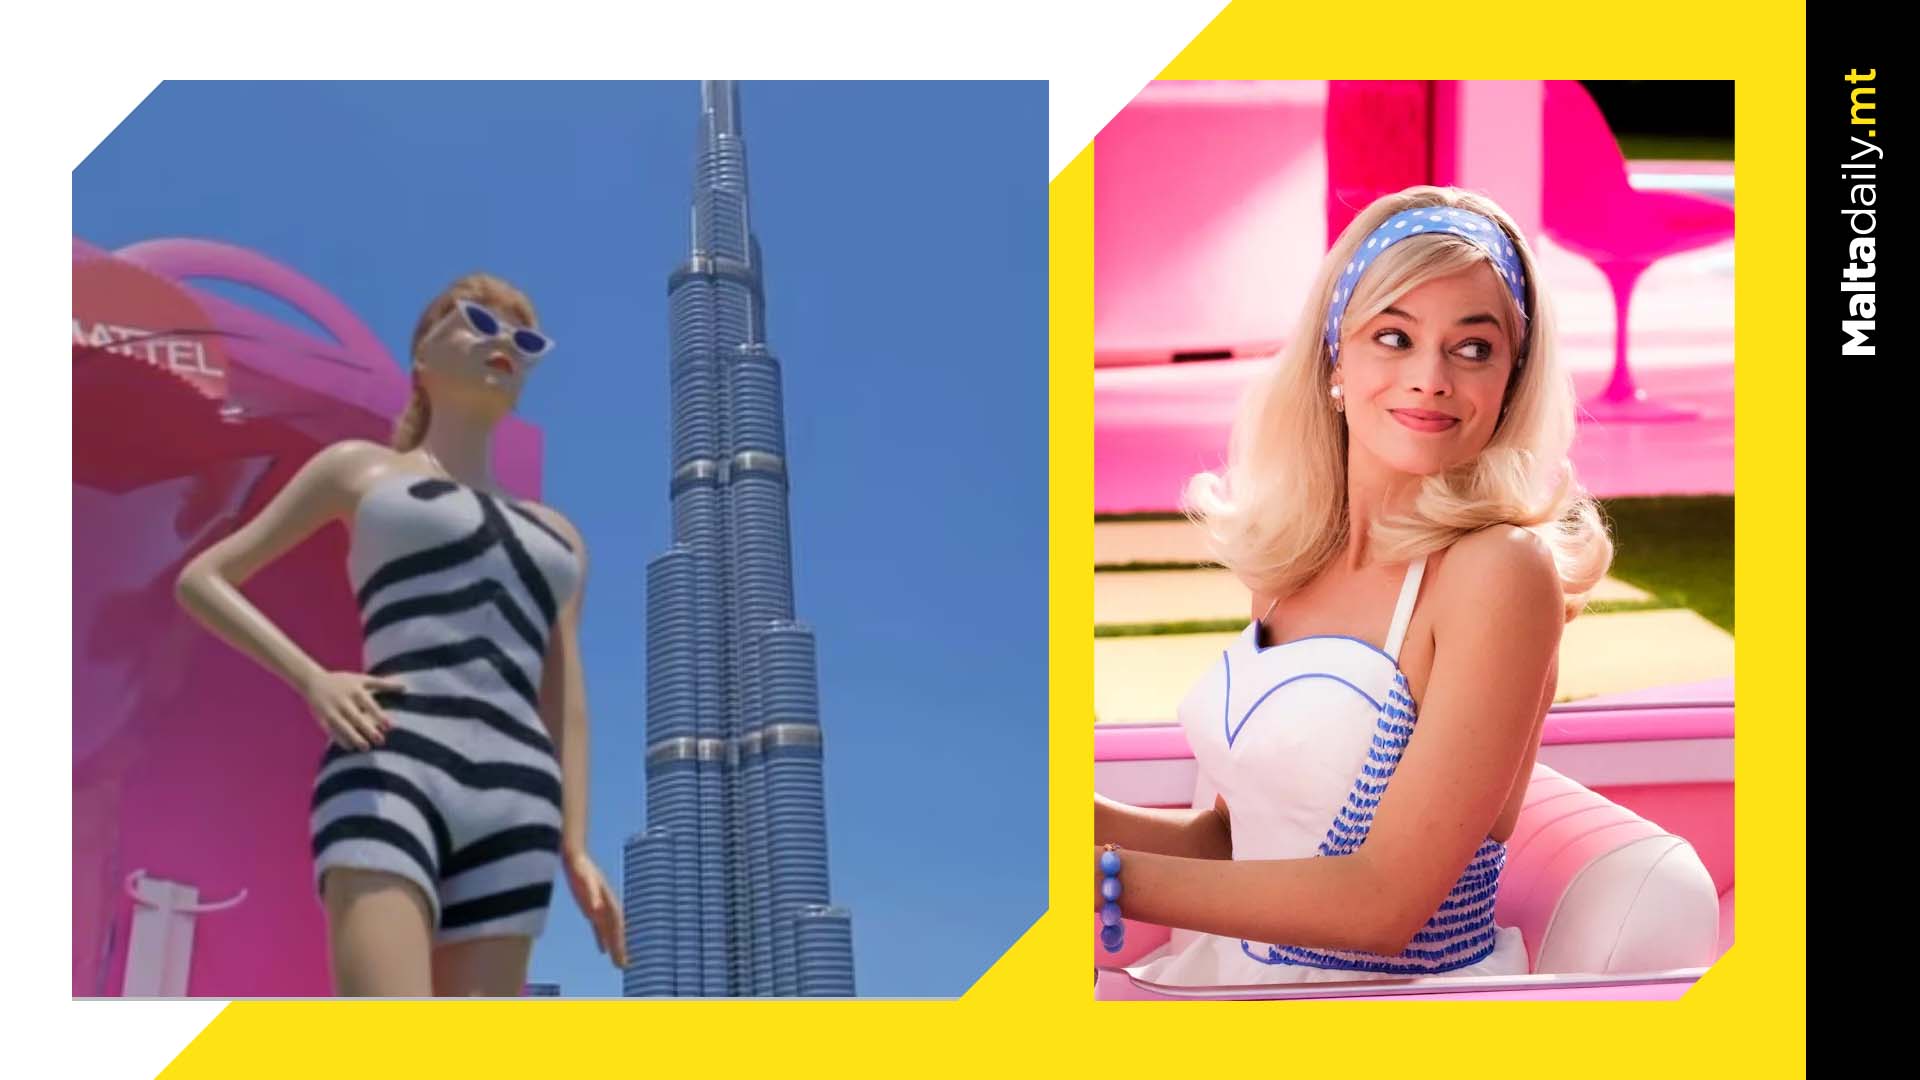 Giant 3D Barbie Next To Burj Khalifa Goes Viral